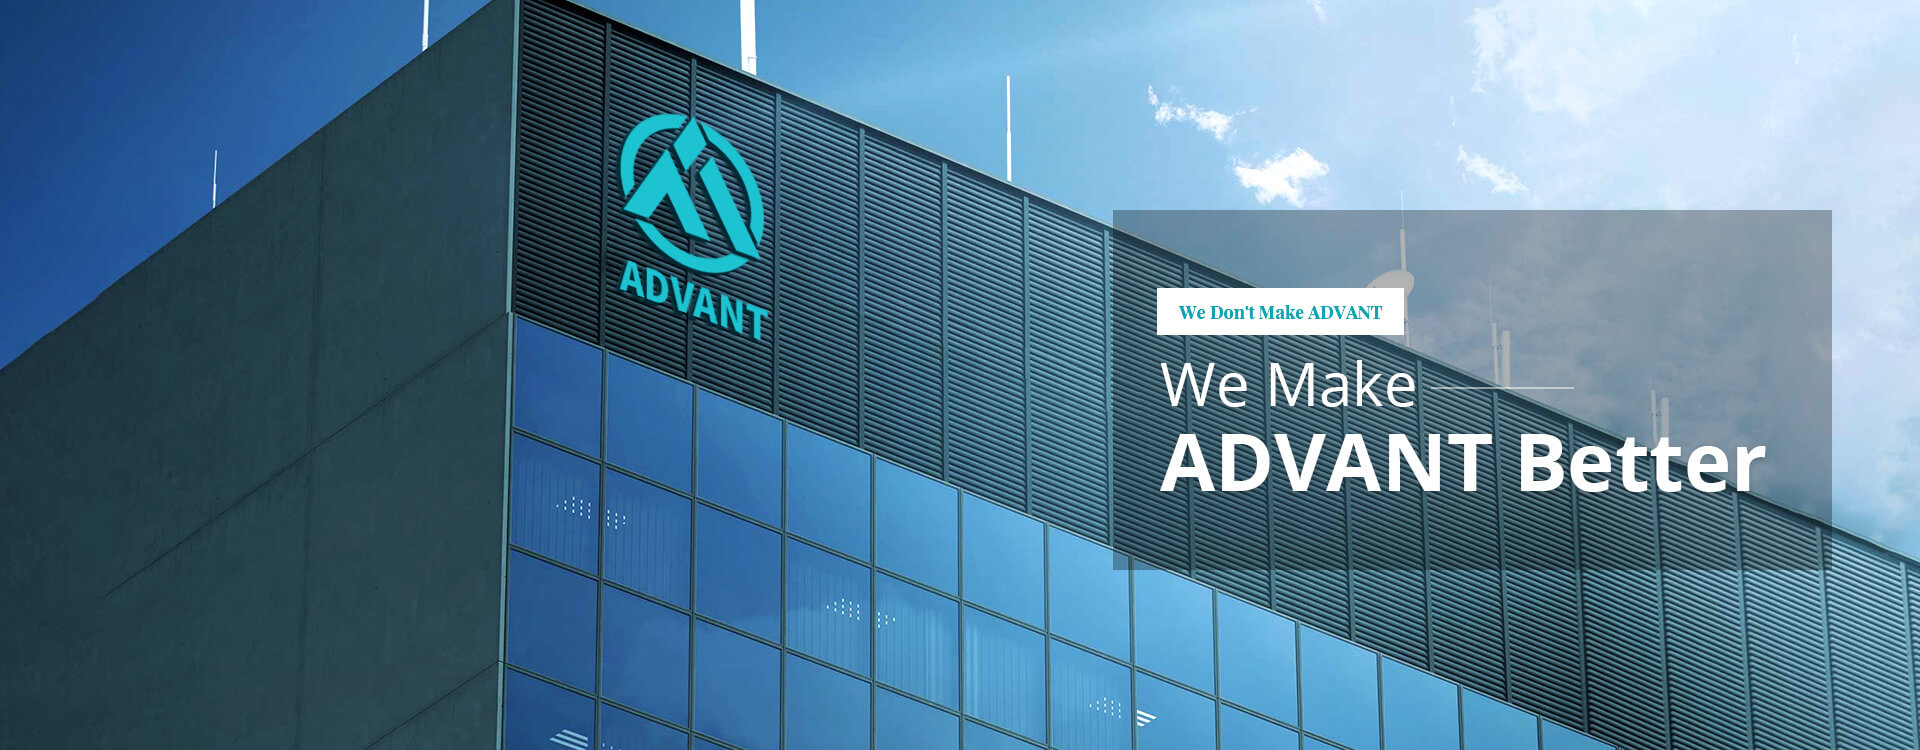 Advant Technology Limited